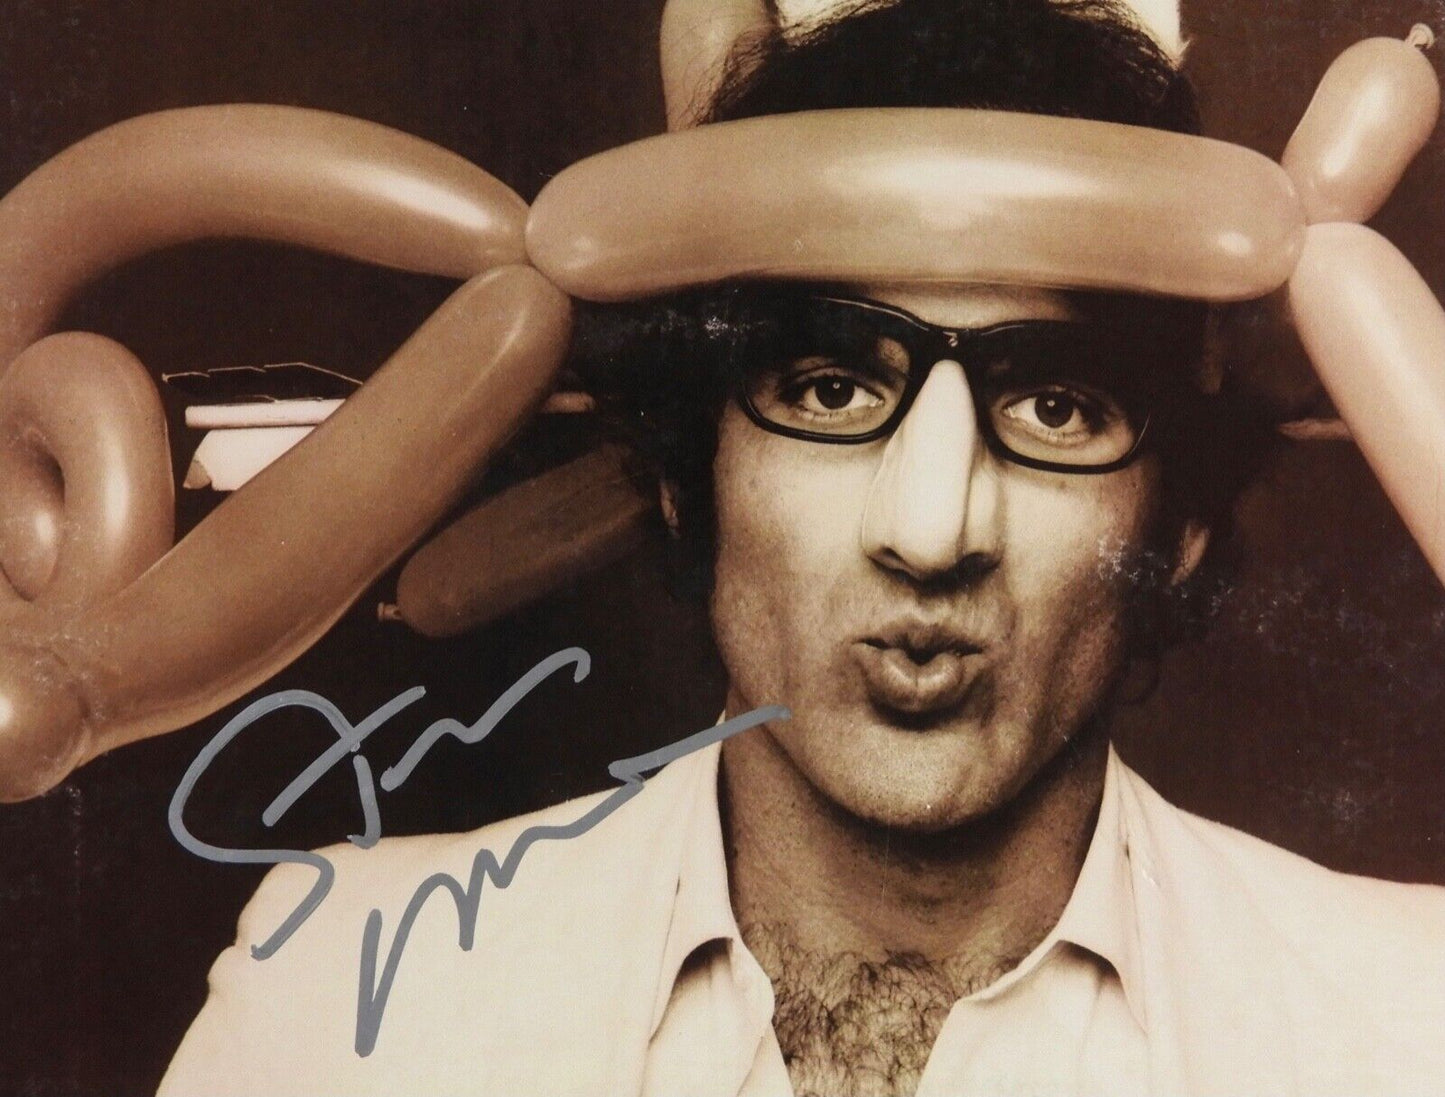 Steve Martin JSA Autograph Signed Album Record Vinyl Let's Get Small